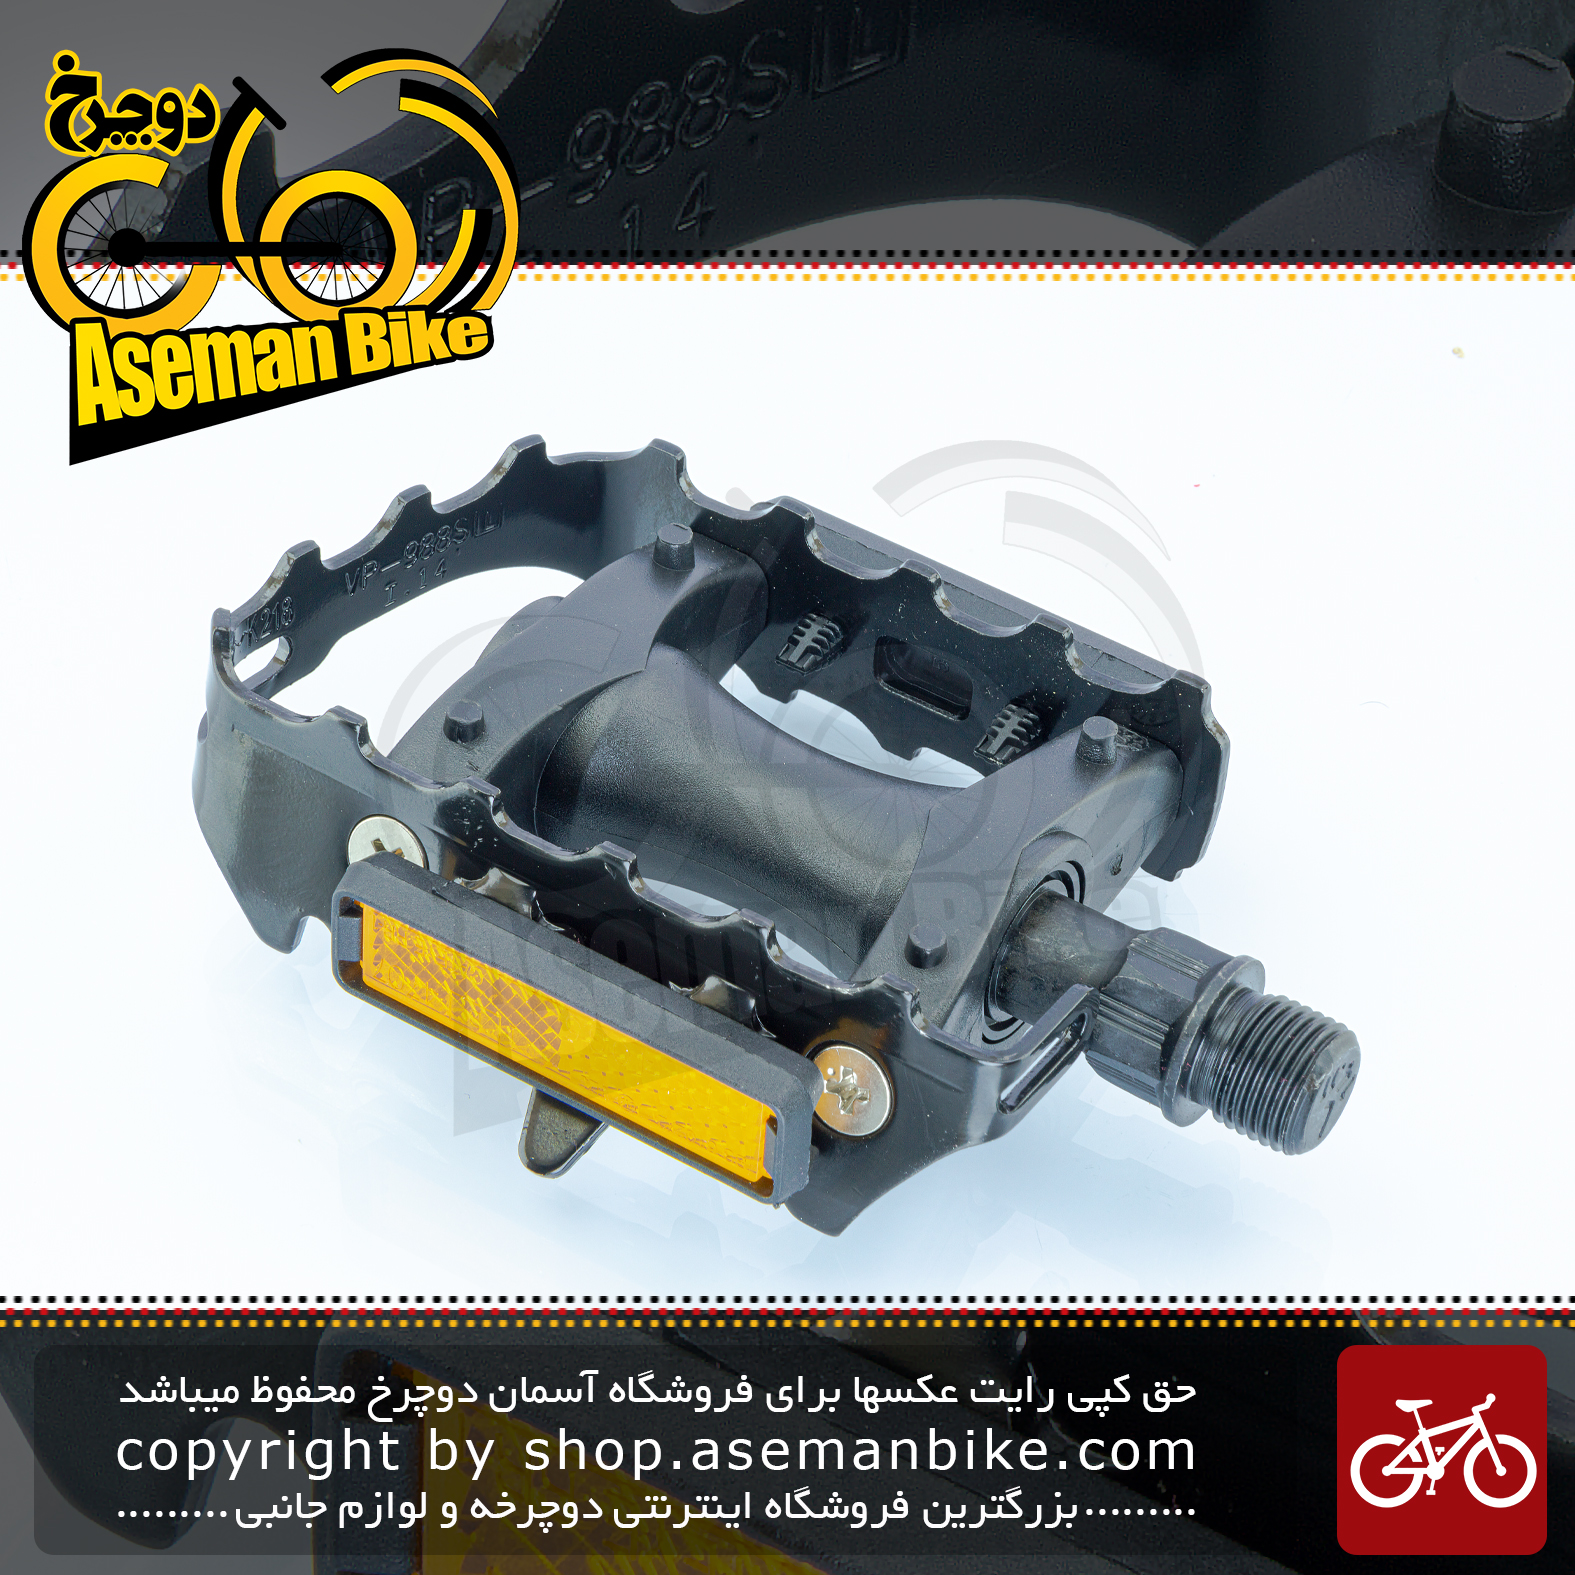 پدال دوچرخه وی پی فلزی مدل وی پی 988 مشکی ساخت تایوان VP Bicycle Pedal vp-988 Taiwan Black